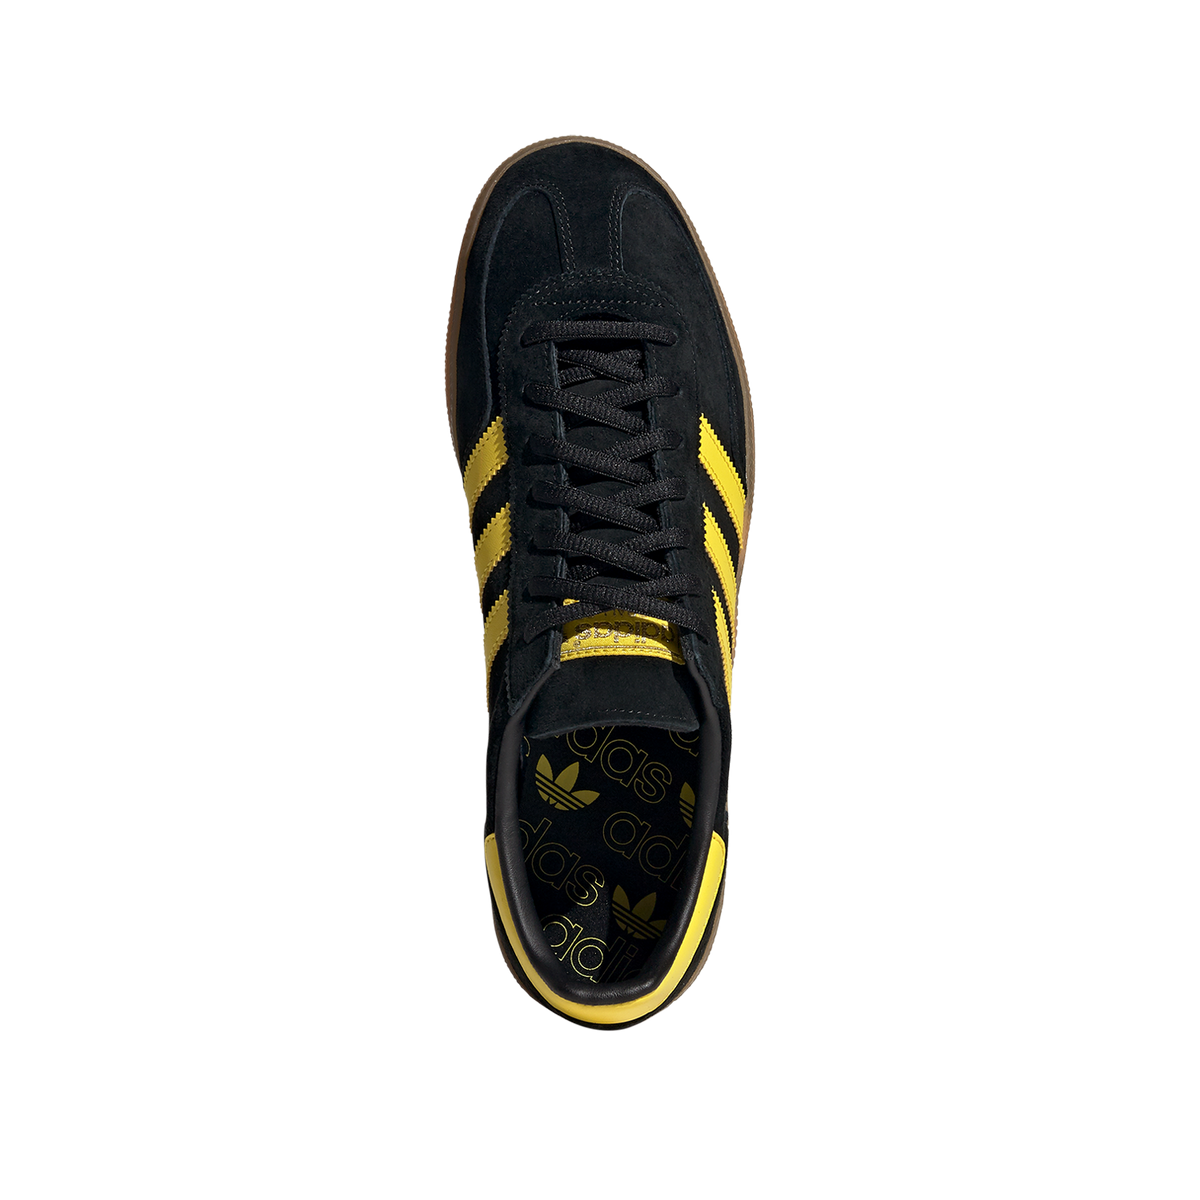 Handball Spezial - Core Black Yellow